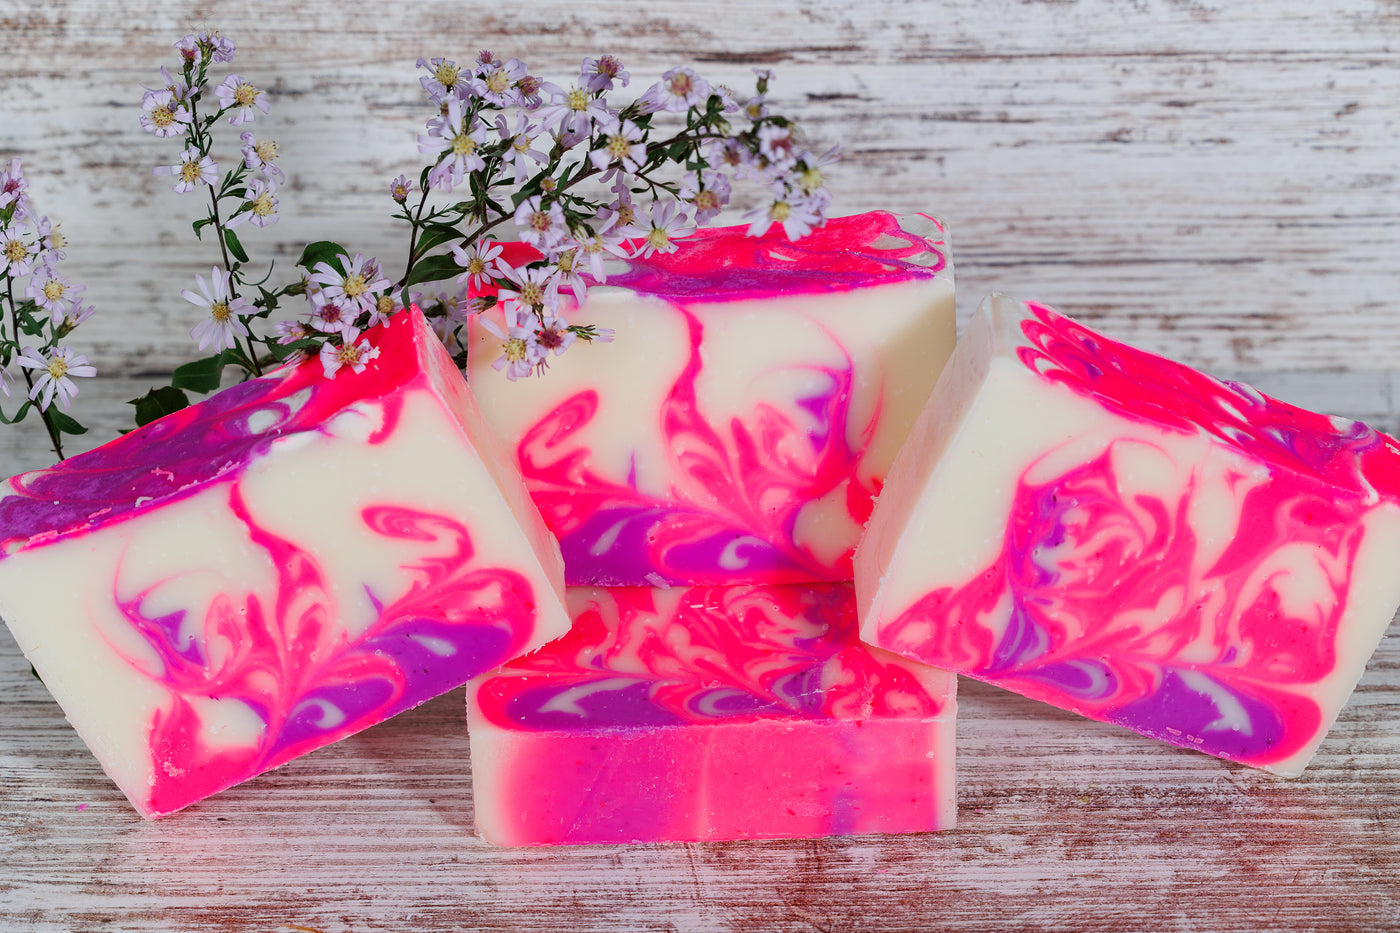 Love Spell Soap | Shea Butter | Cocoa Butter Soap | Handmade Artisanal Cold Process Soap | Gift for her | Gift for Self | Gift for Kids